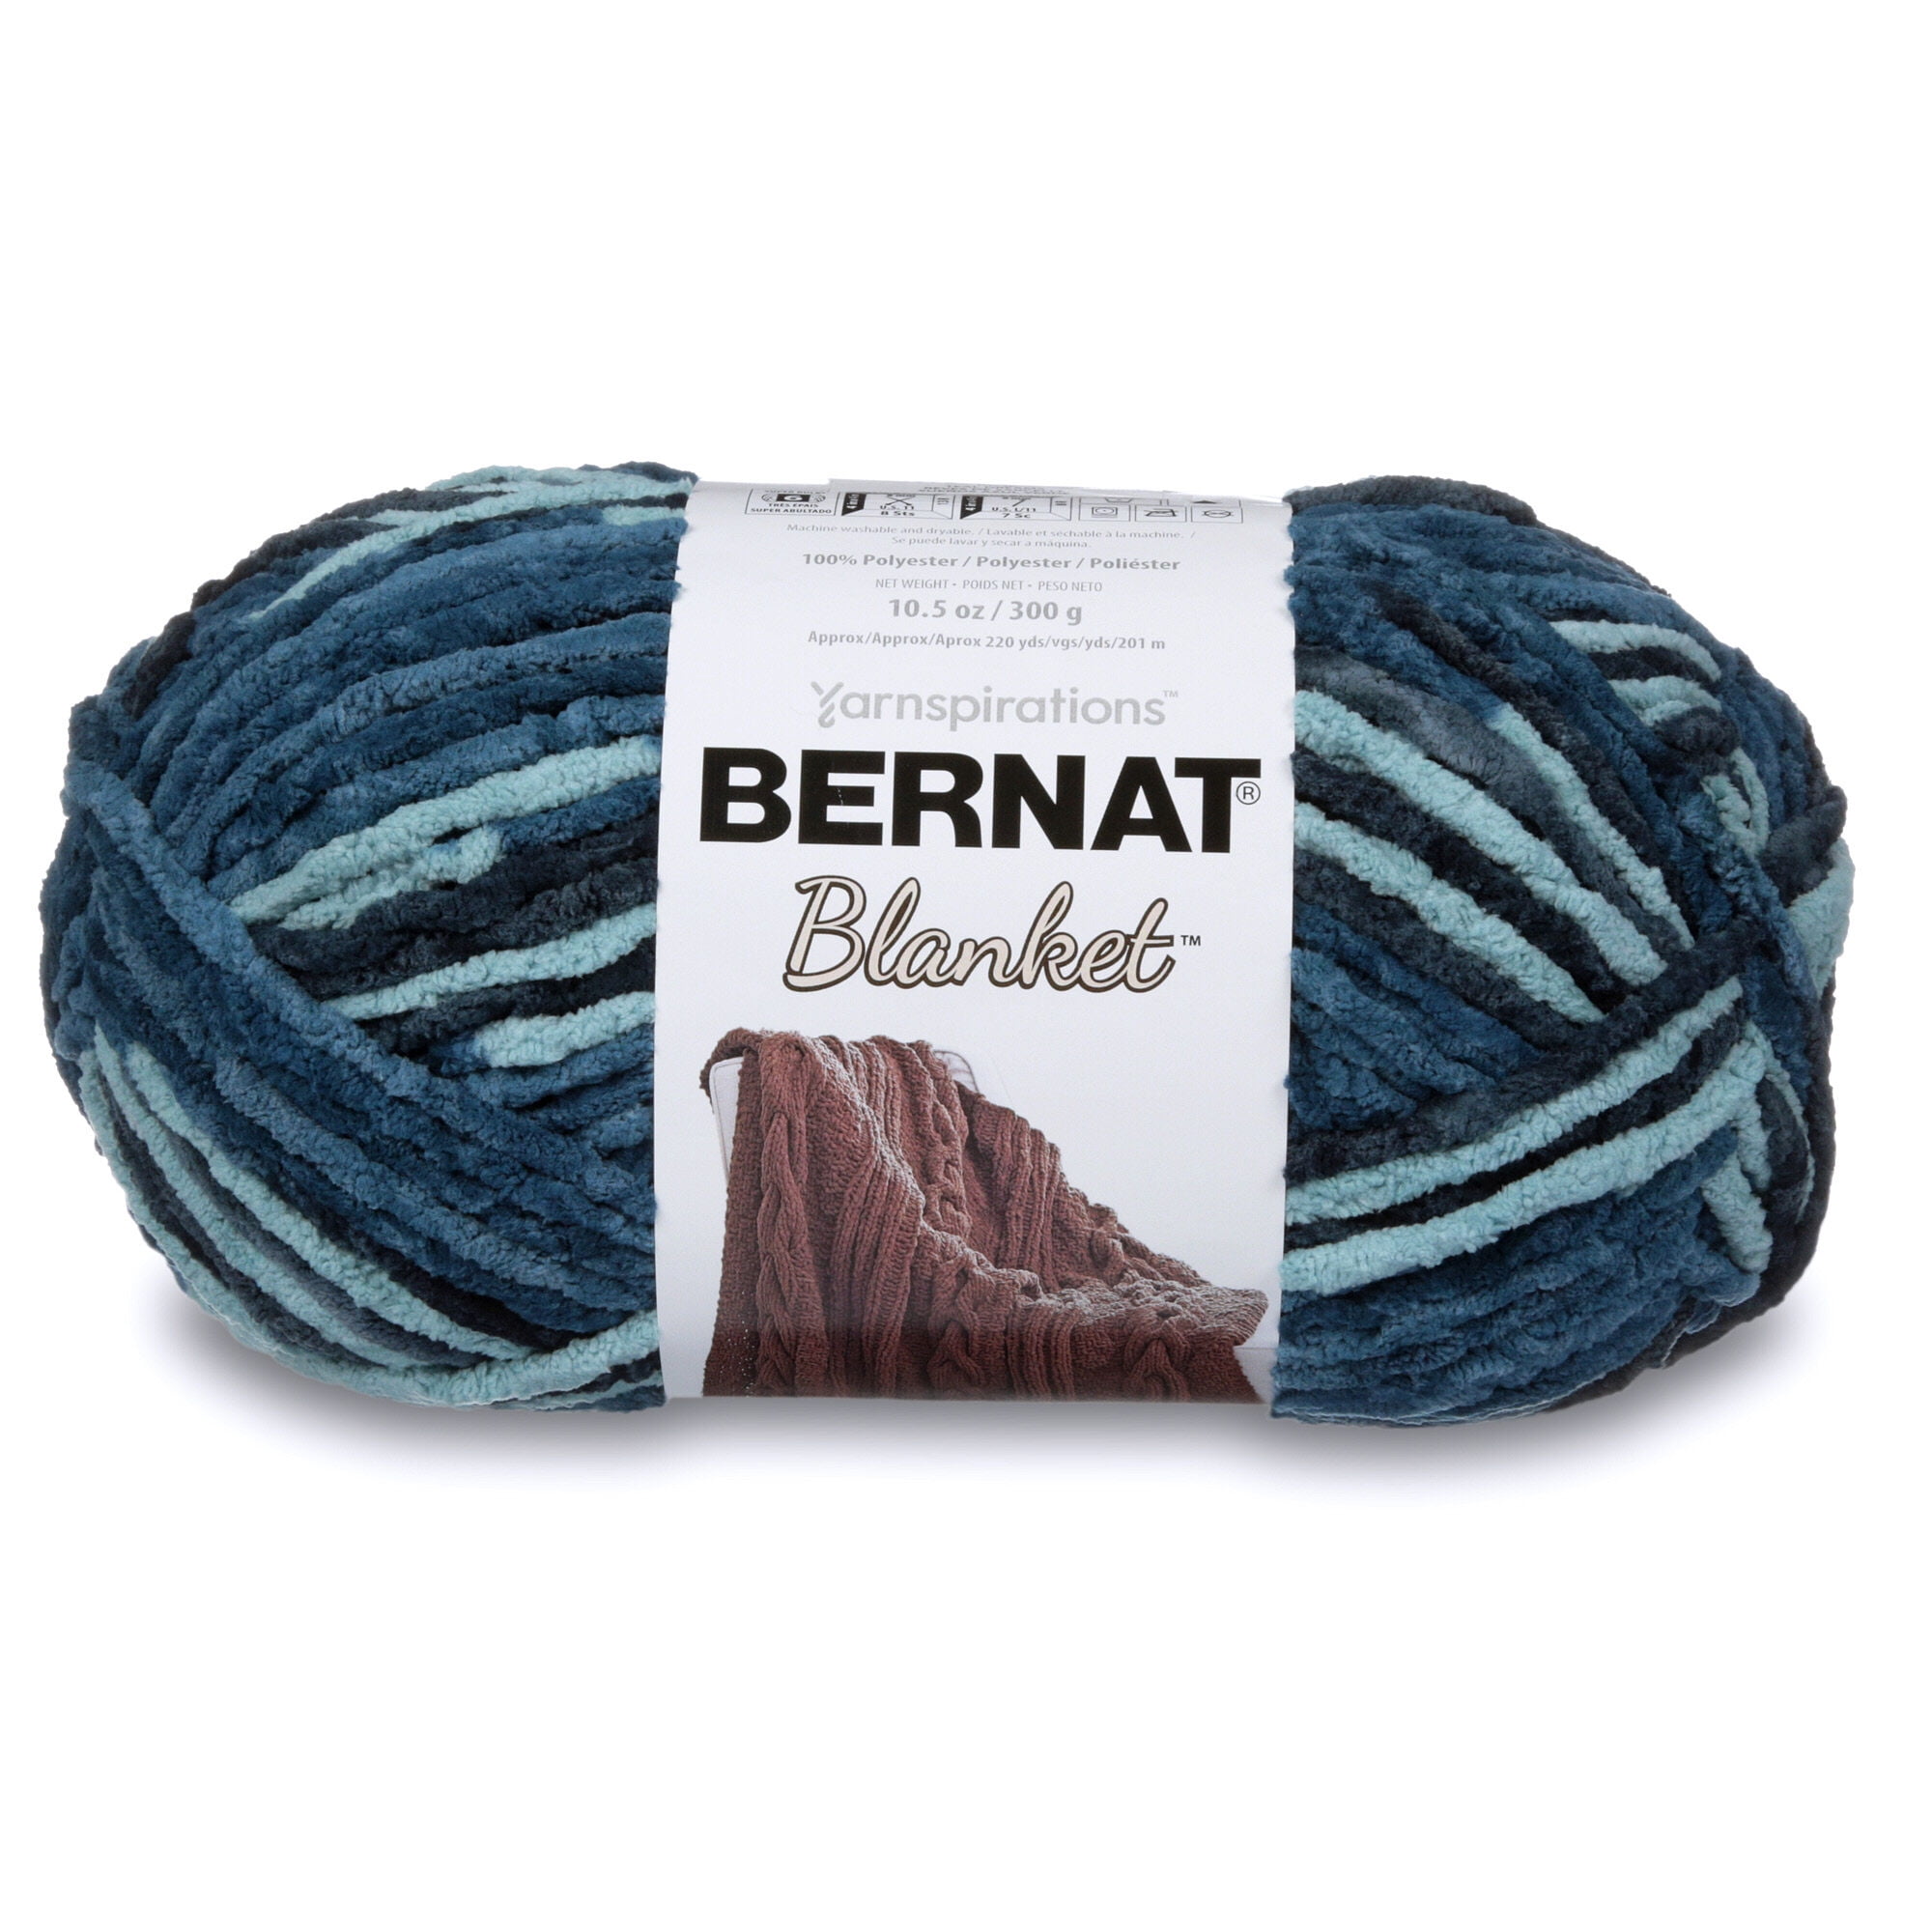 Bernat Blanket 6 Super Bulky Polyester Yarn, Teal Dreams 10.5oz/300g, 220 Yards